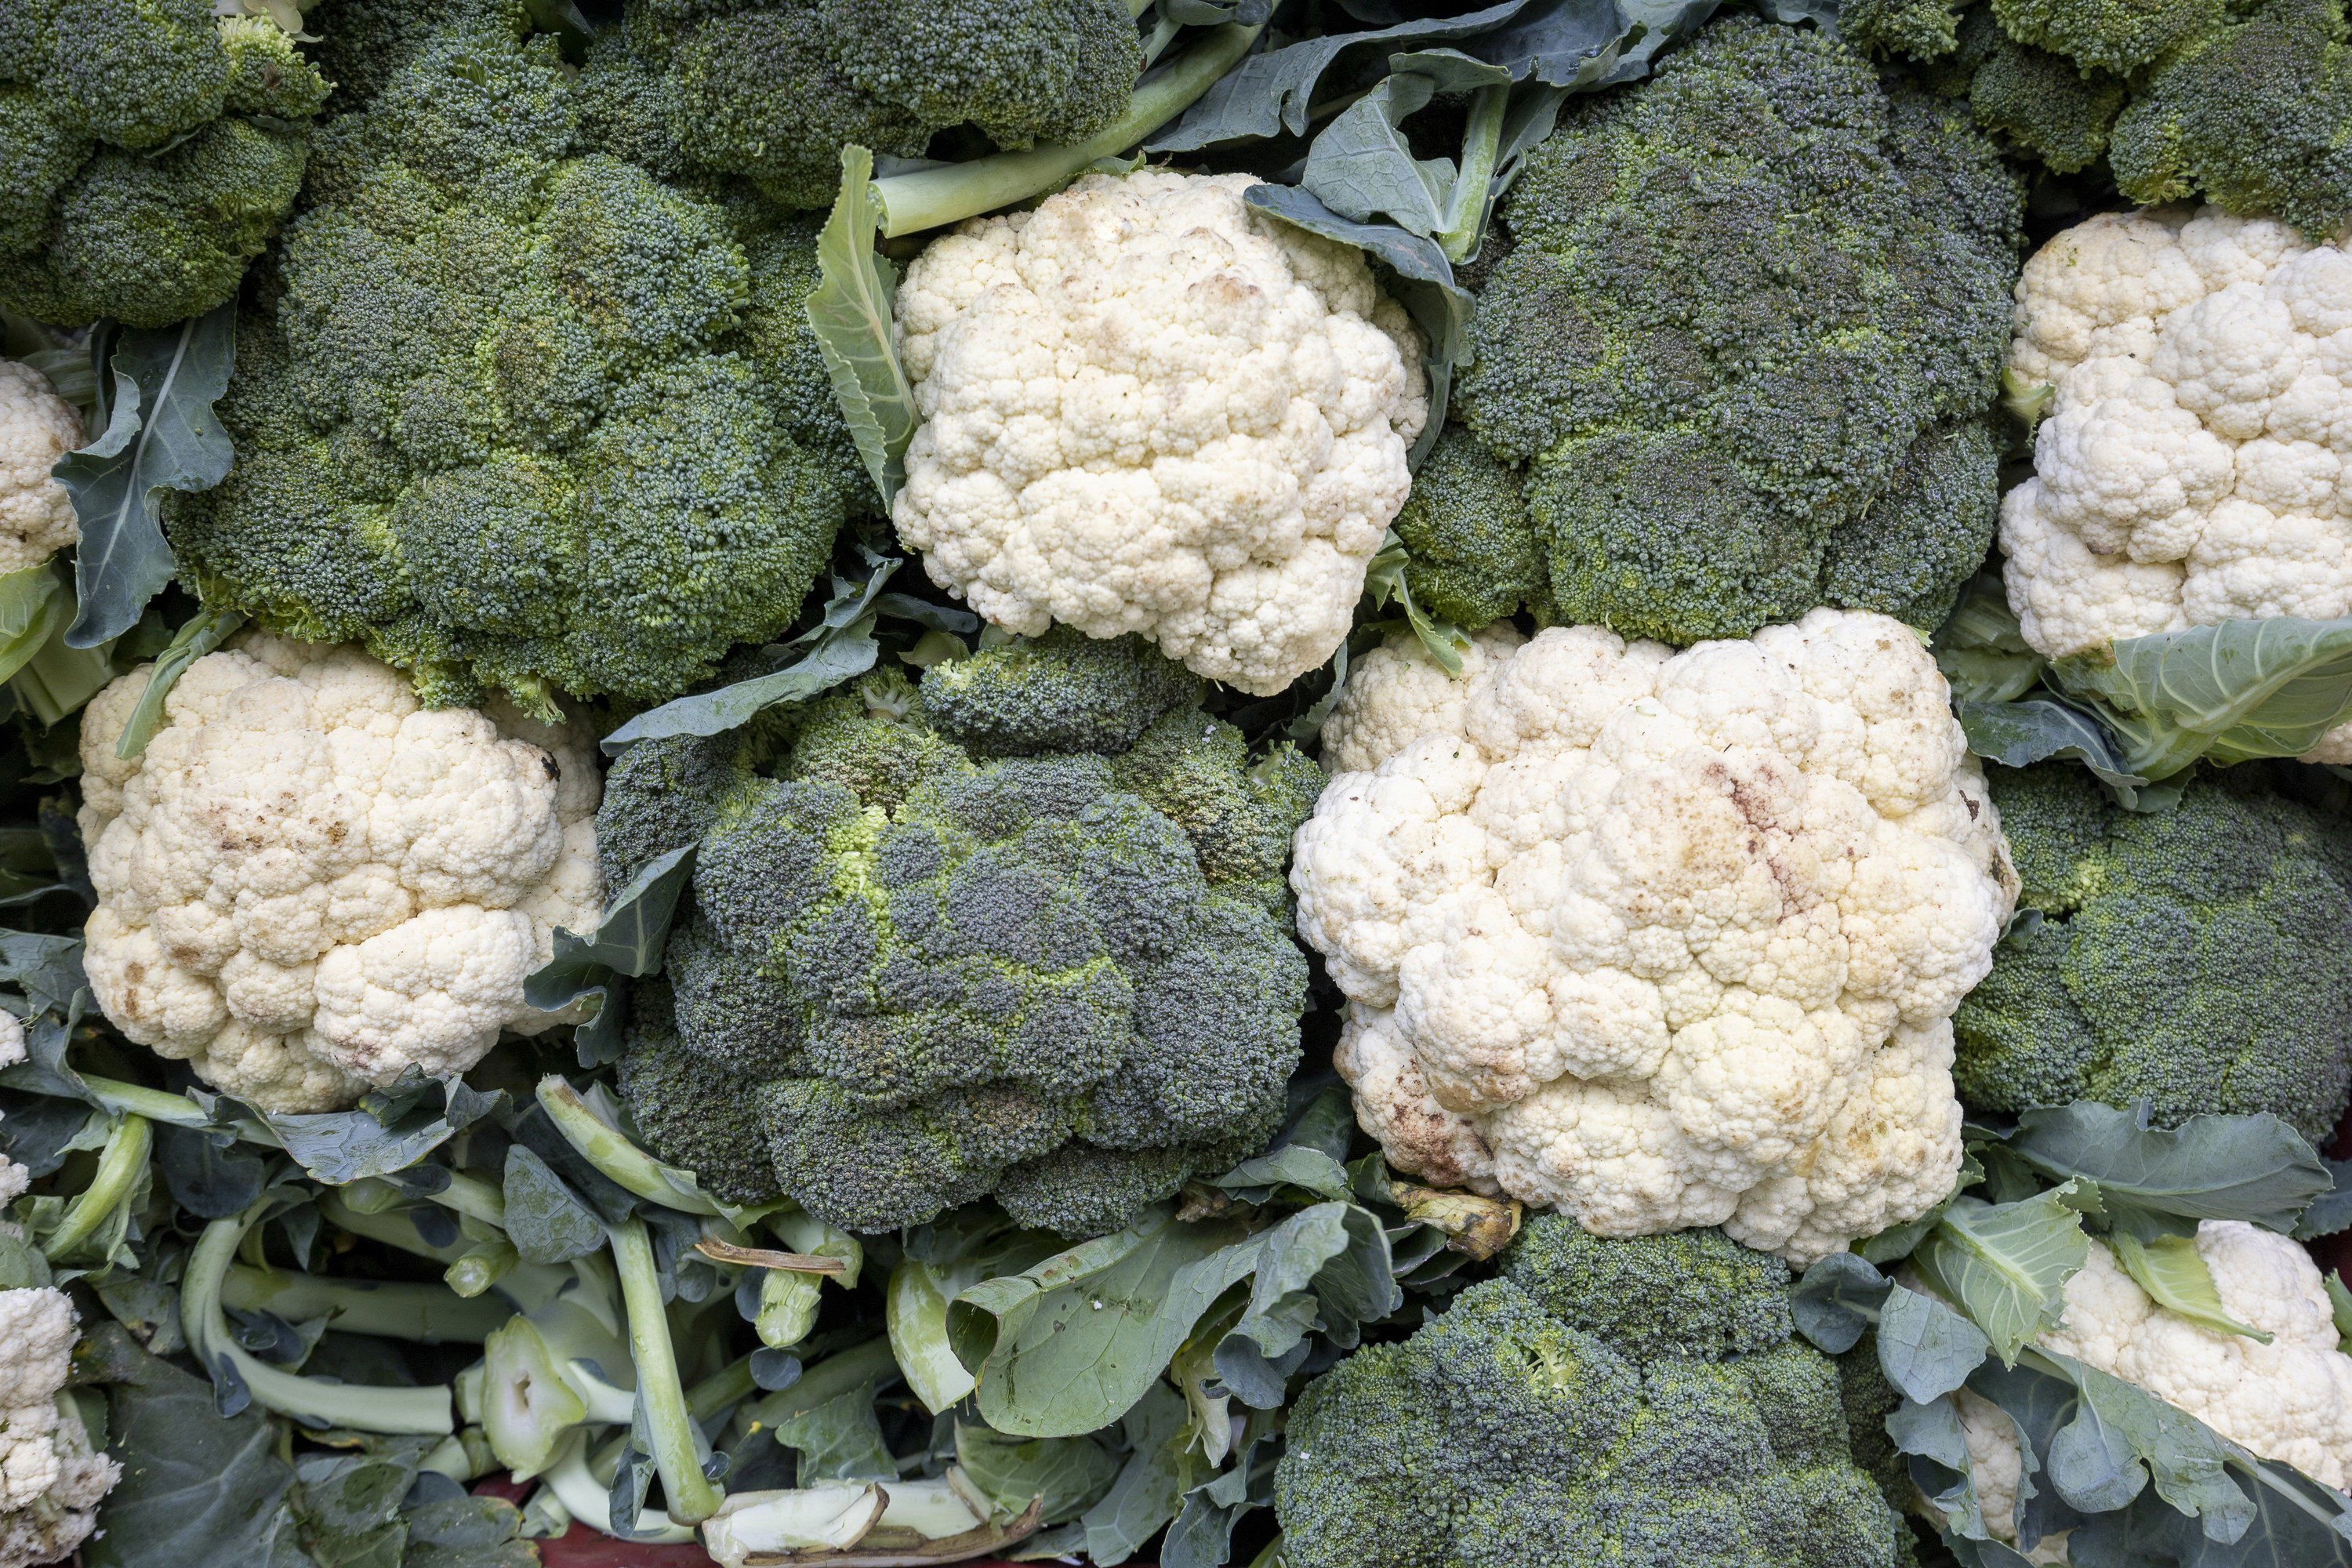 Broccoli and cauliflower on display